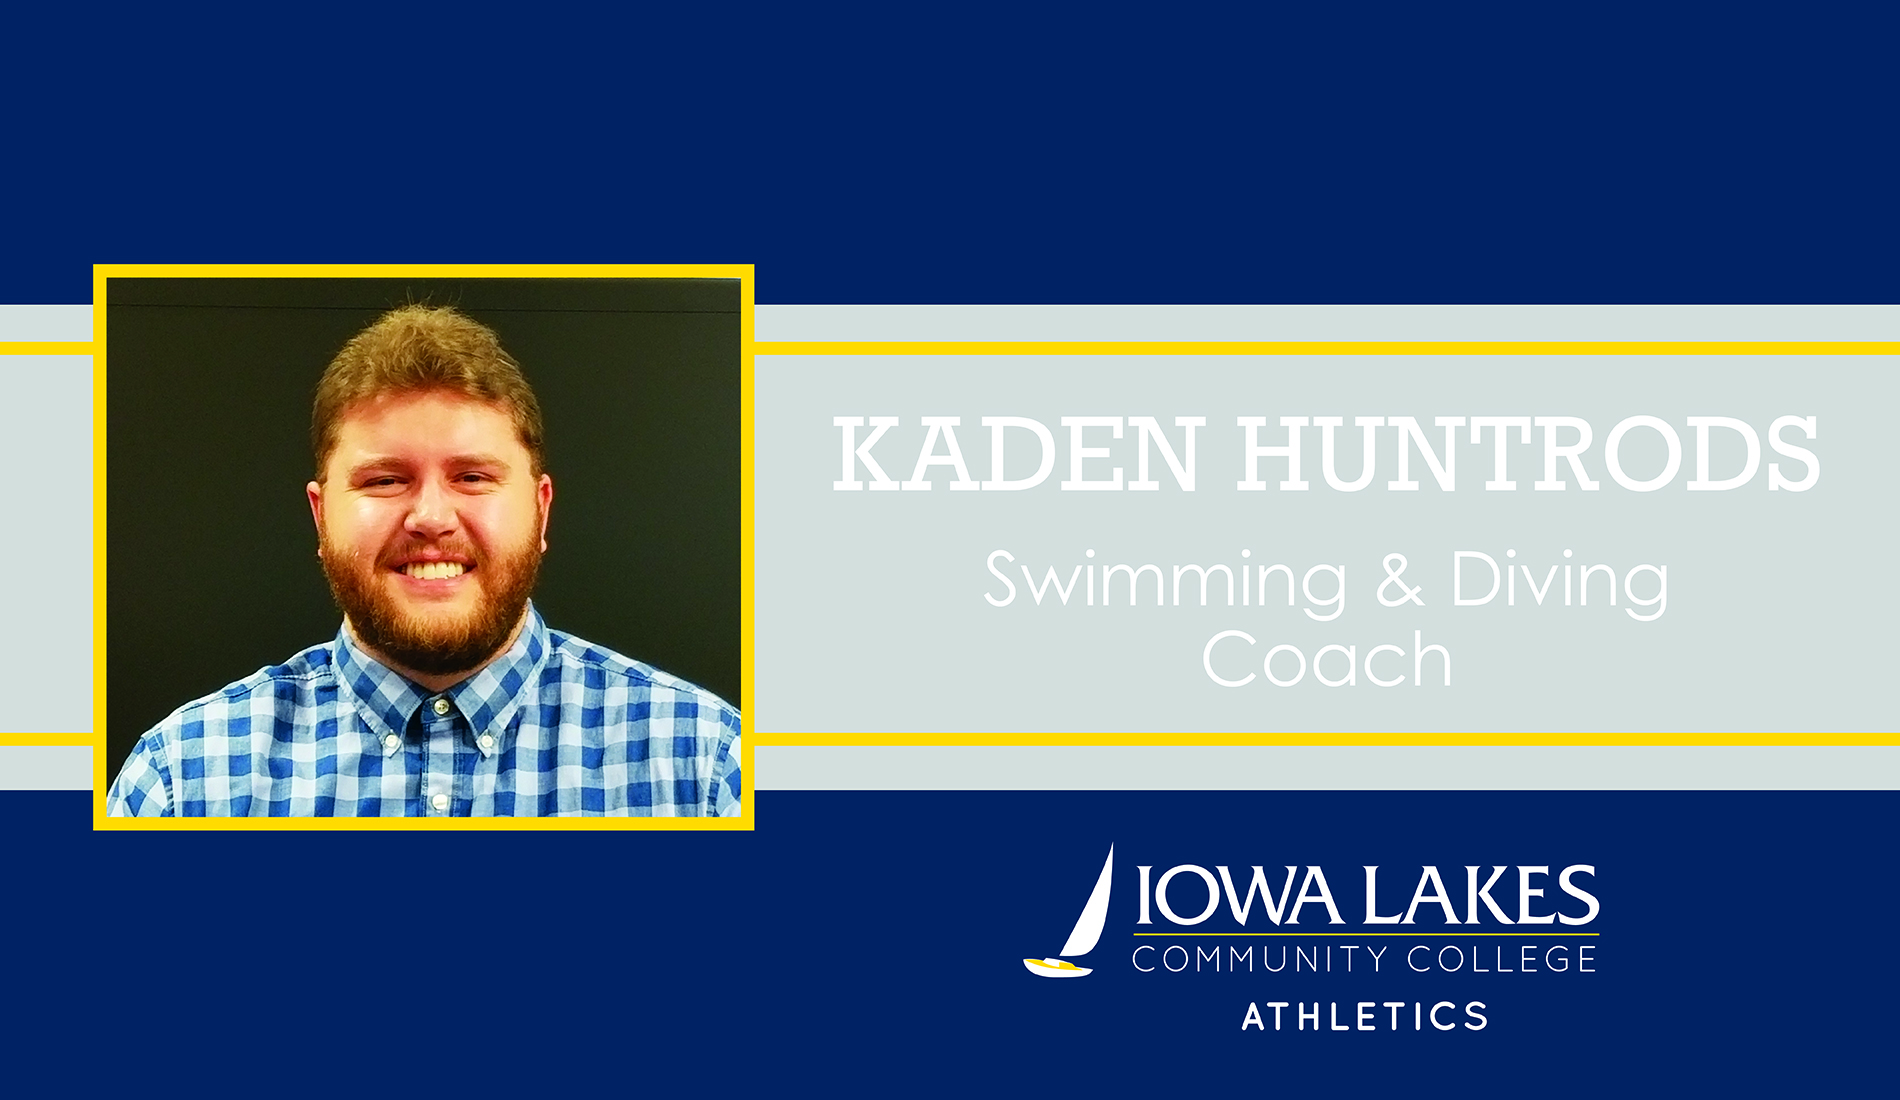 Iowa Lakes Community College Names Kaden Huntrods as the New Head Men’s & Women’s Swimming Coach